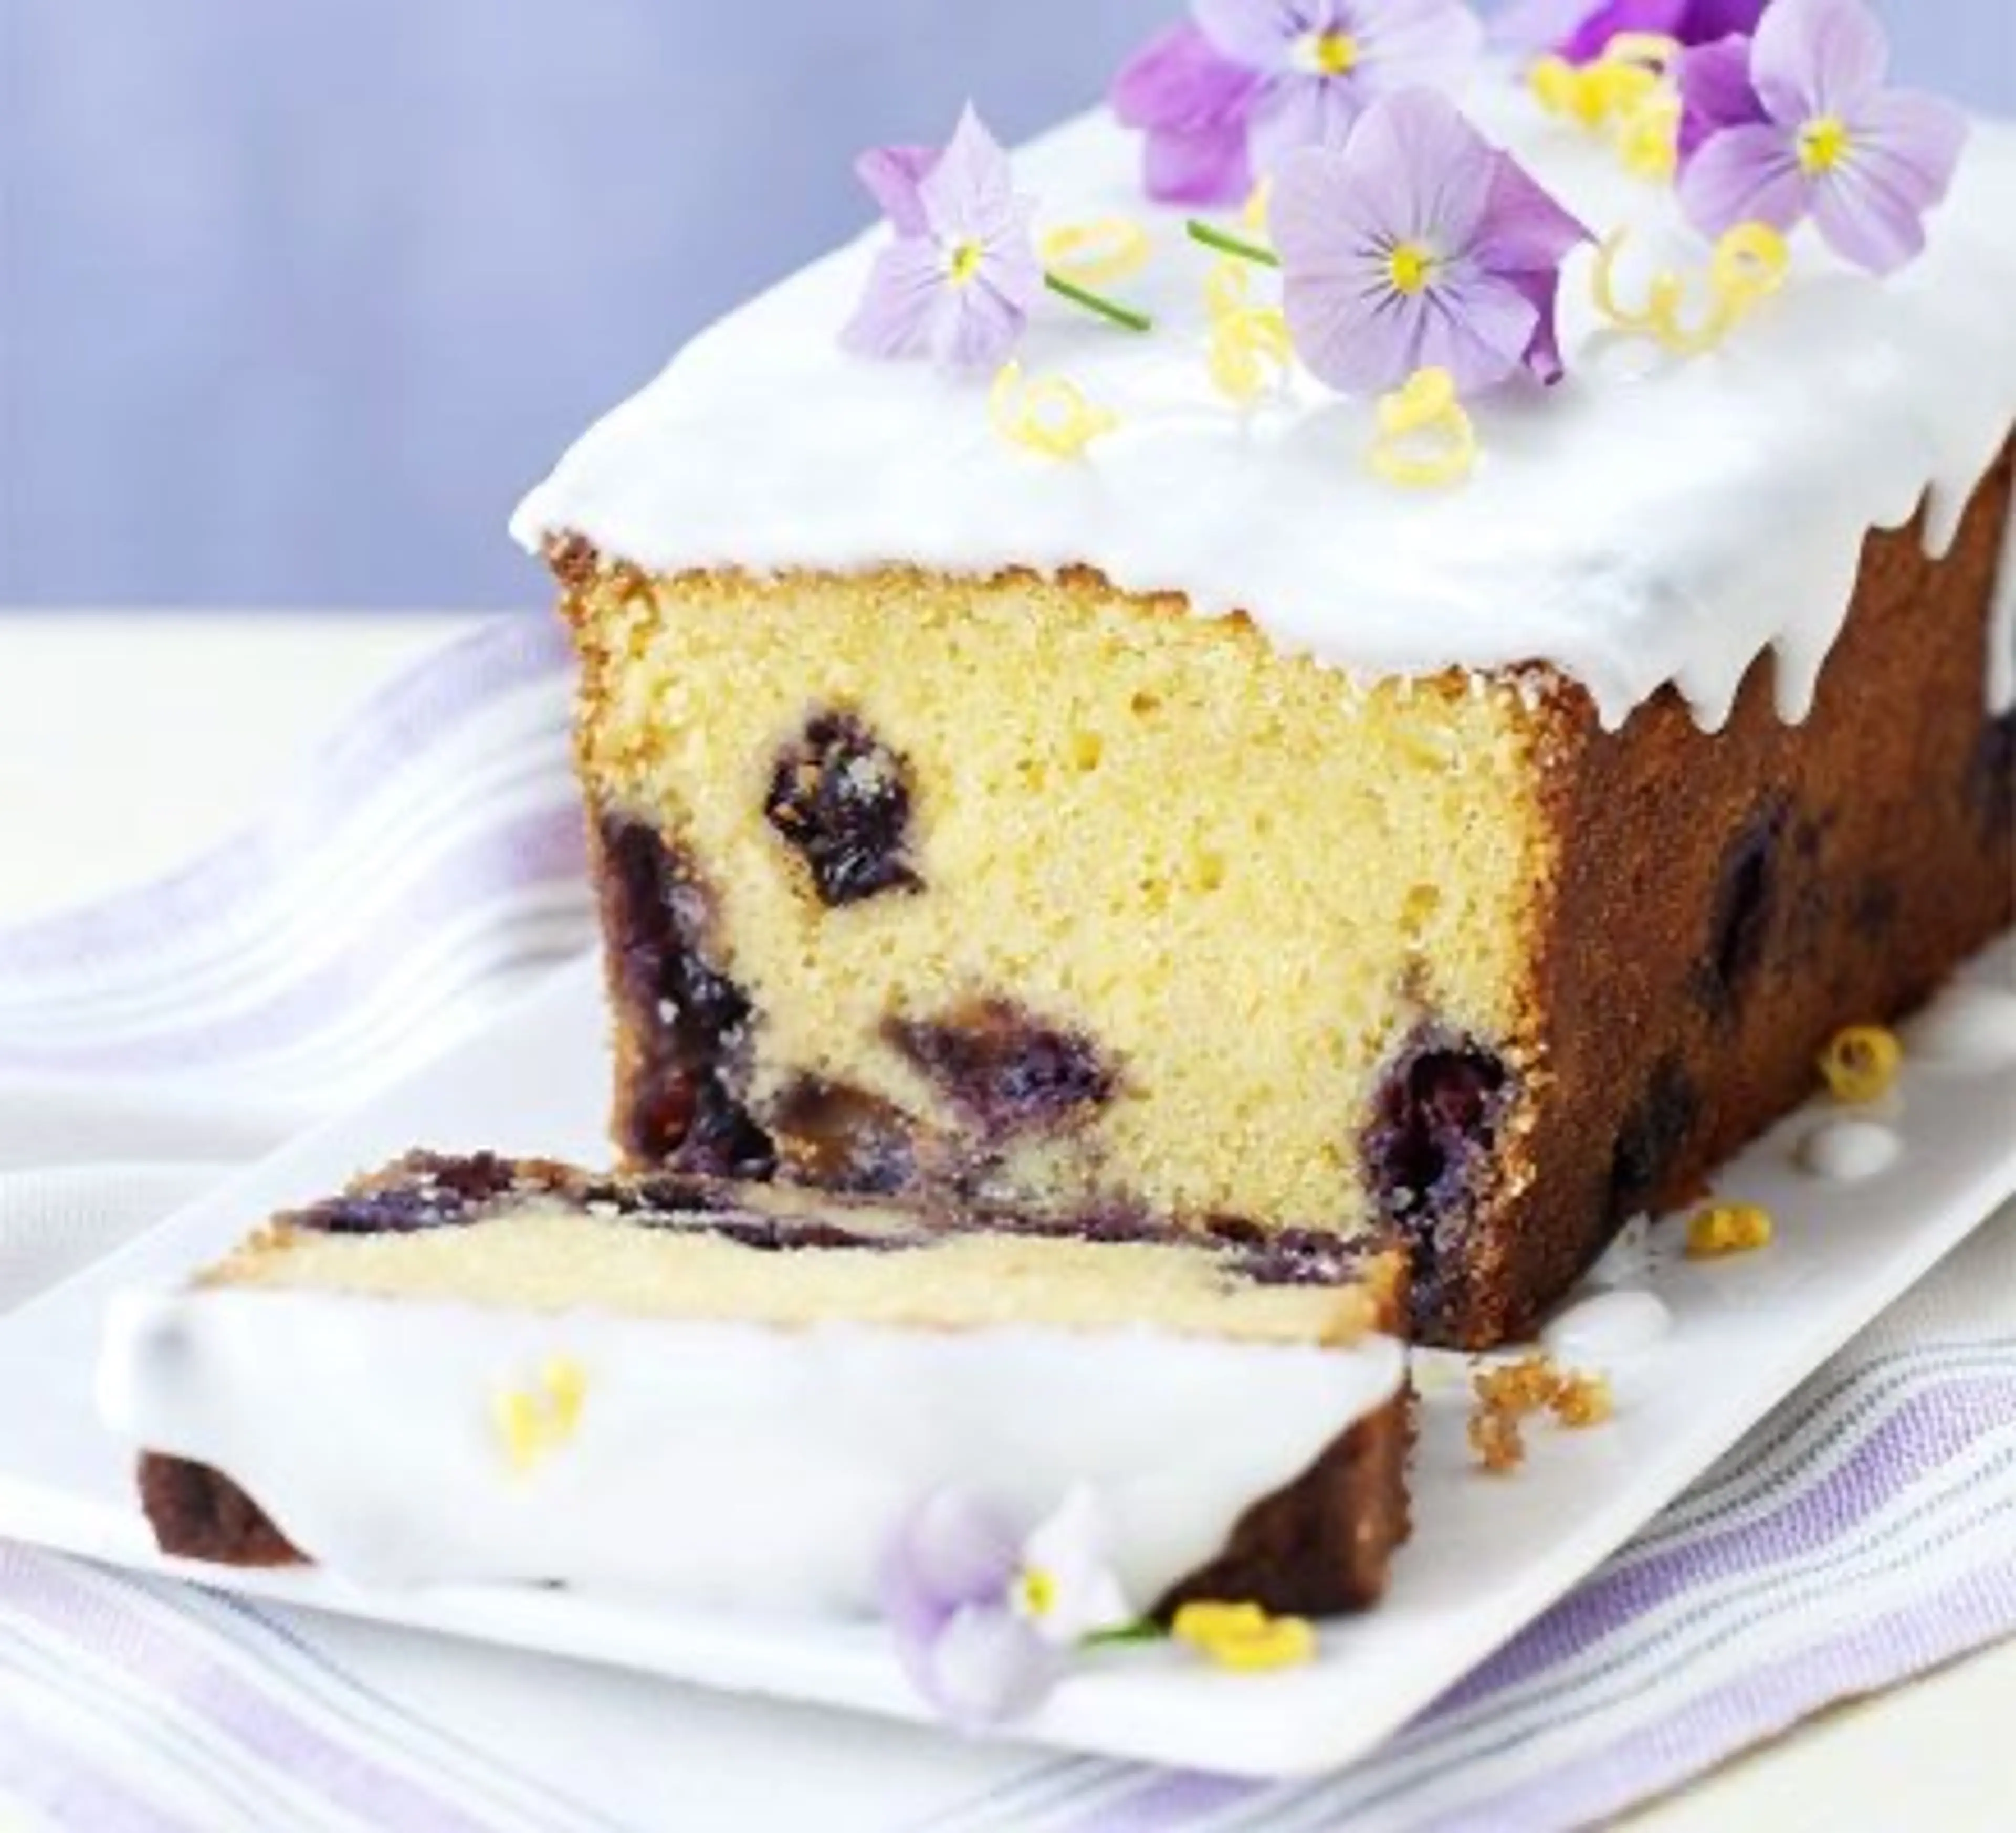 Lemon & blueberry loaf cake